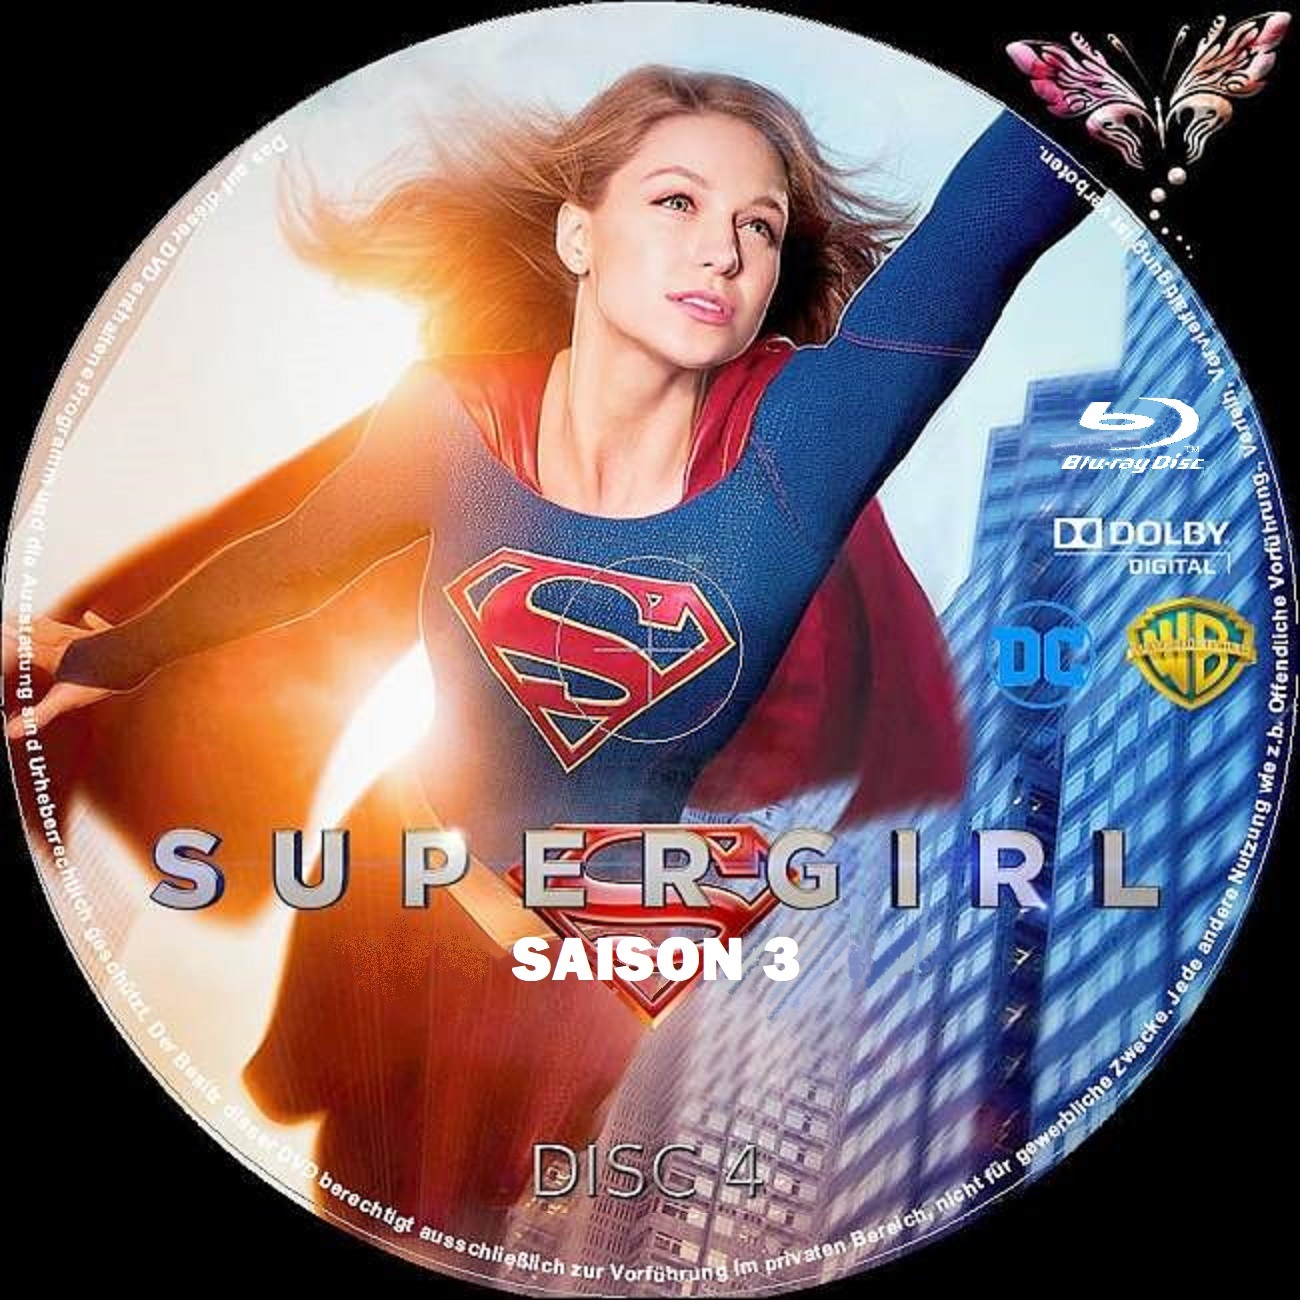 Supergirl saison 3 custom (BLU-RAY) DISC 4